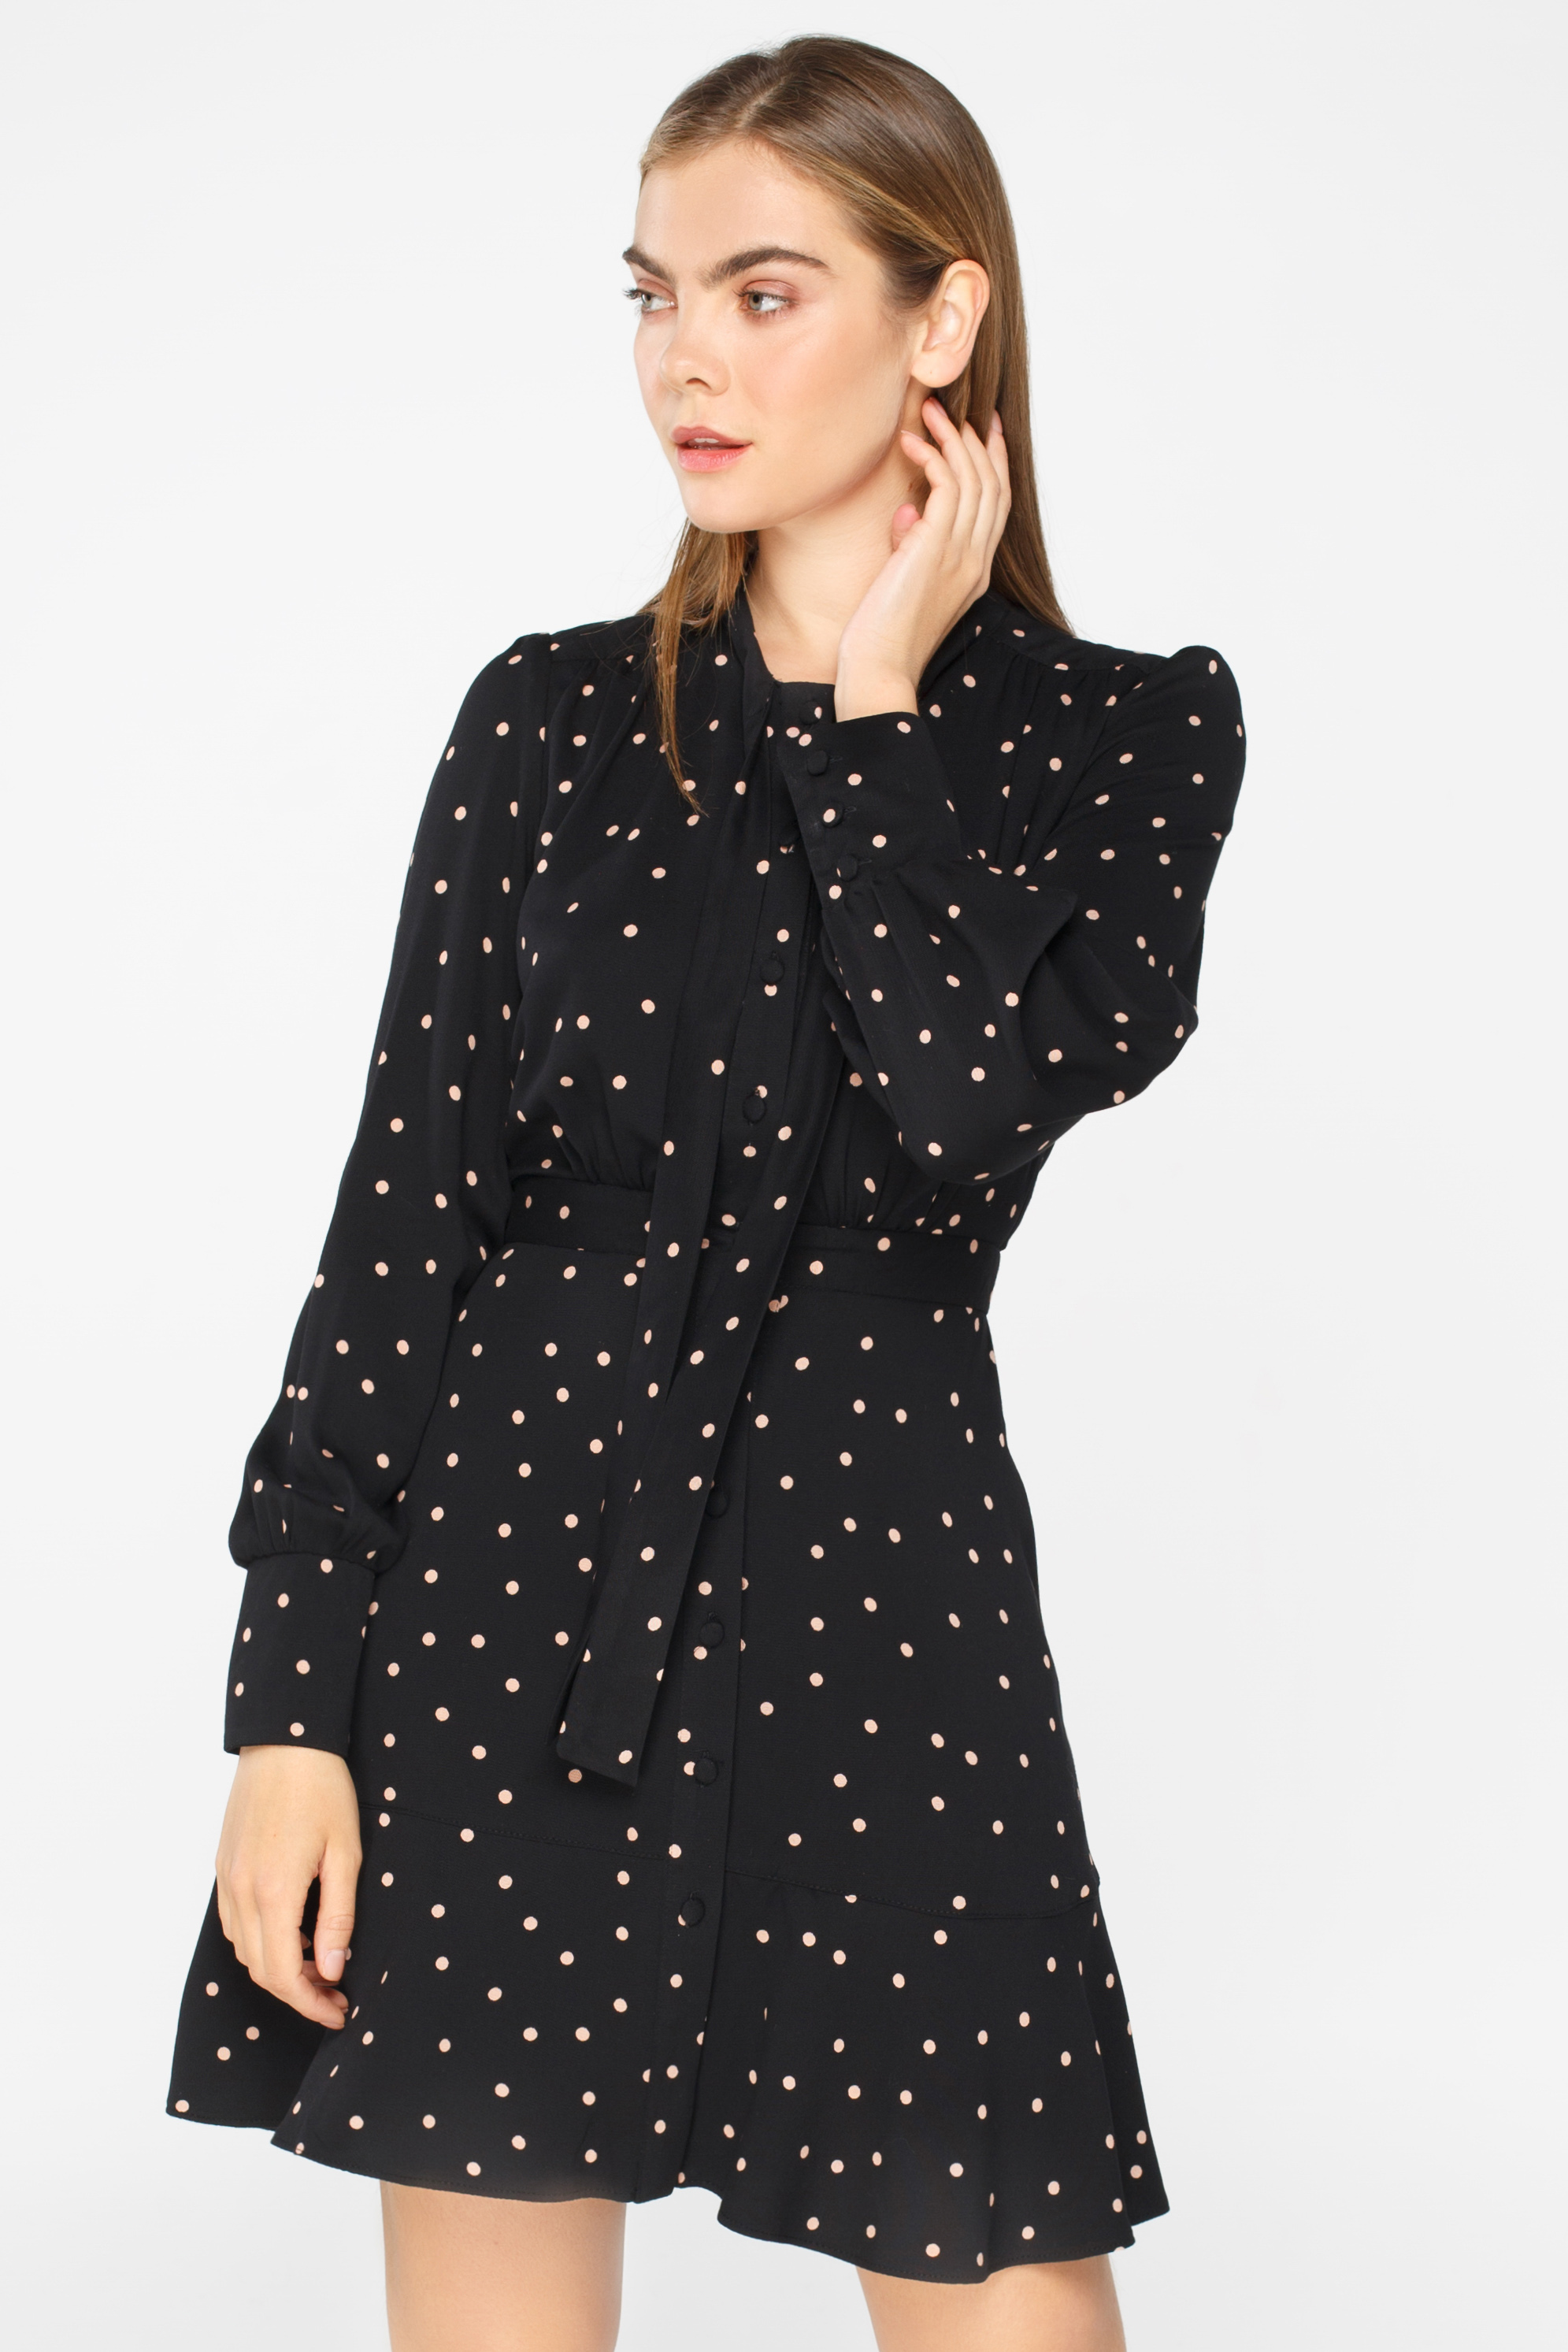 Black polka dot dress above the knee, photo 1